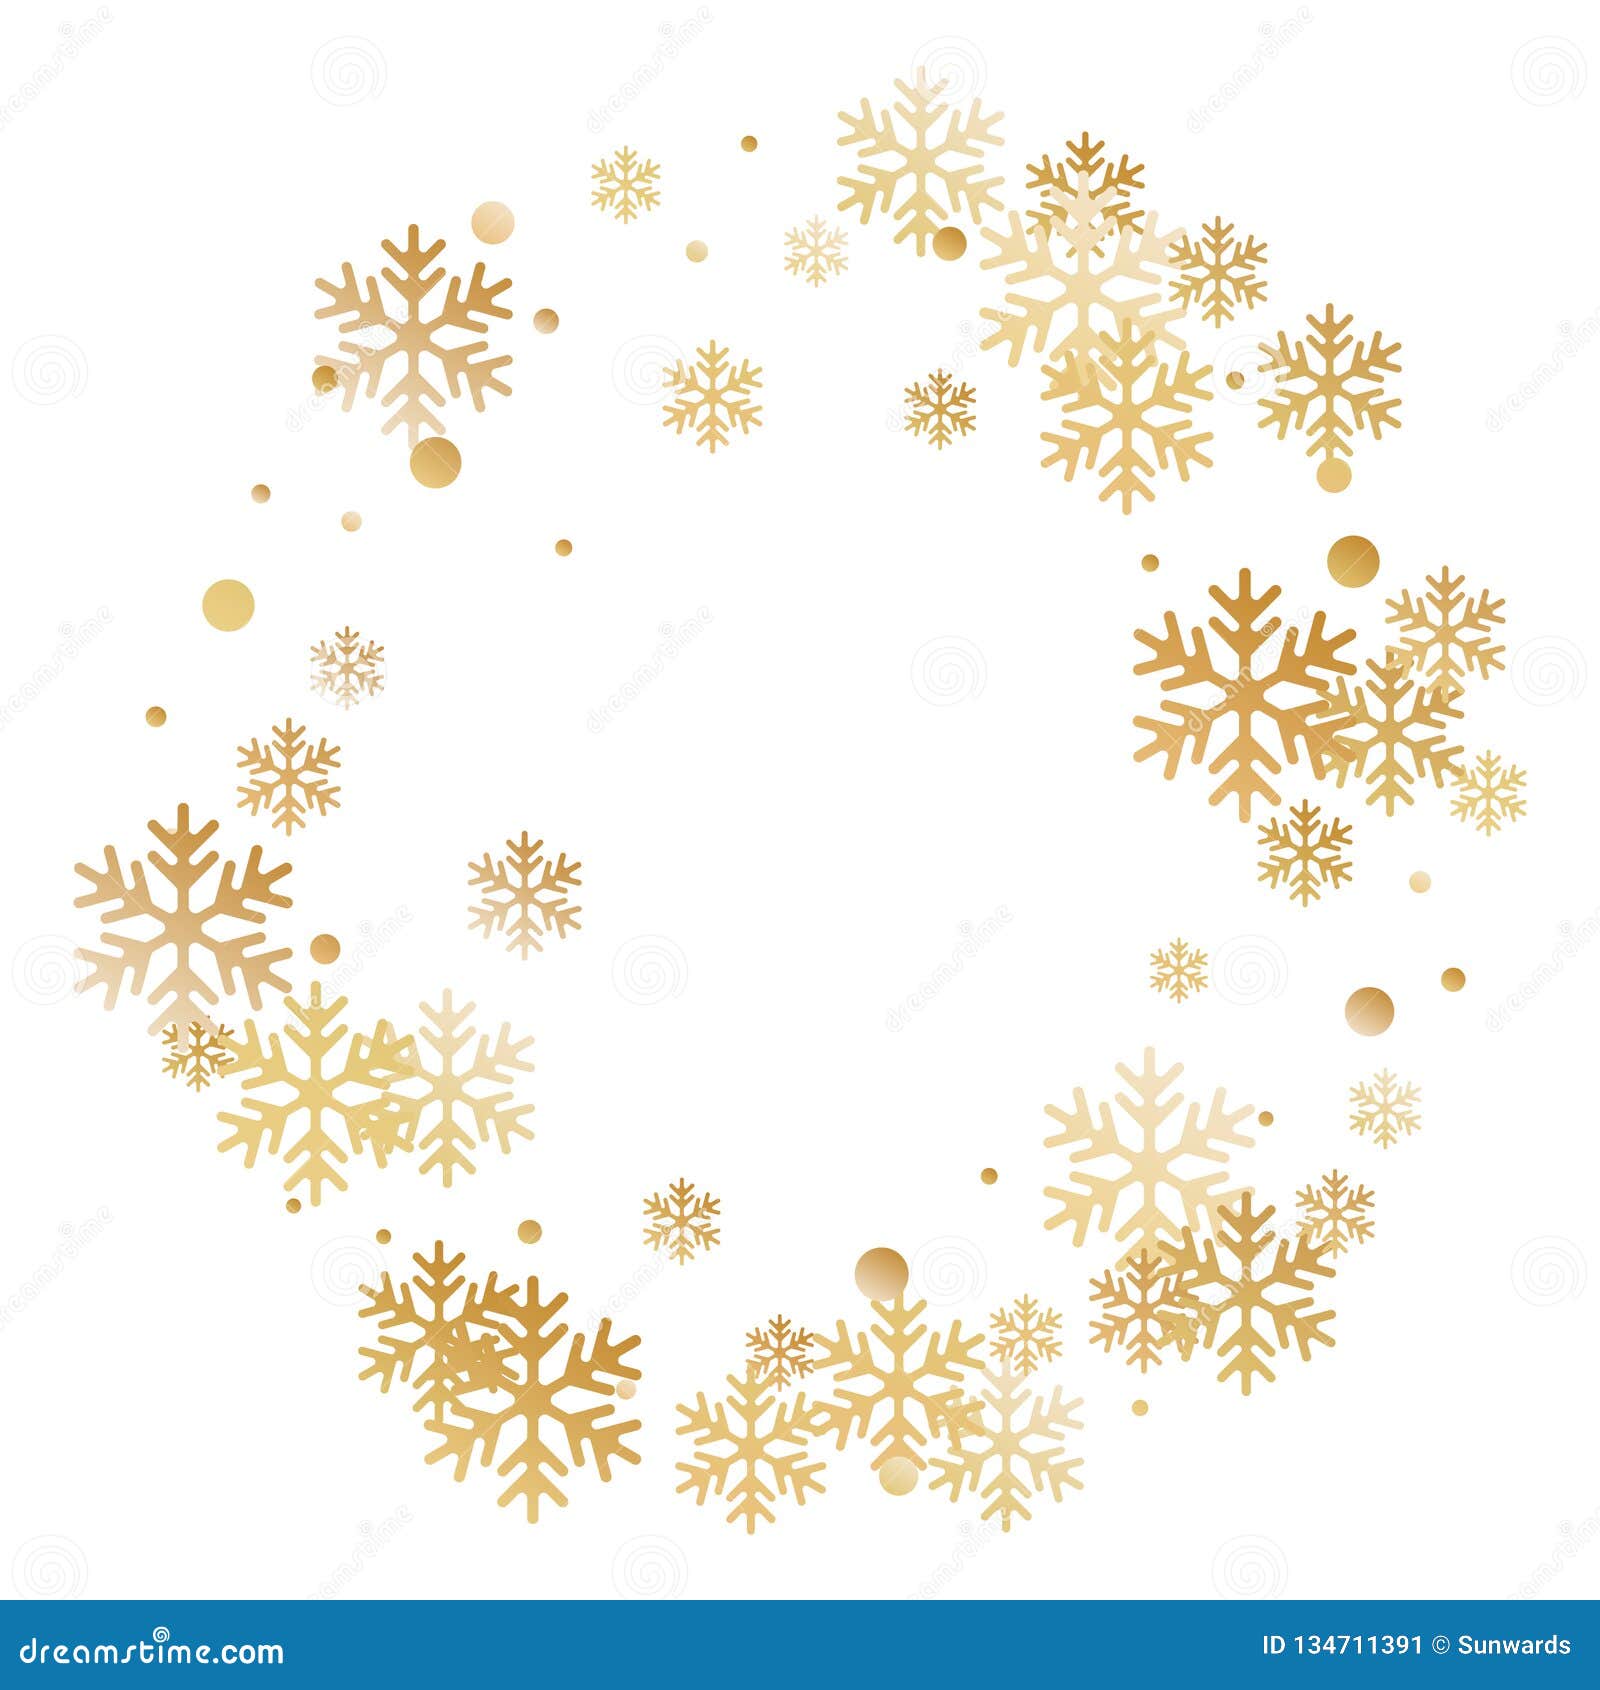 Winter Snowflakes And Circles Border Vector Design Stock Vector